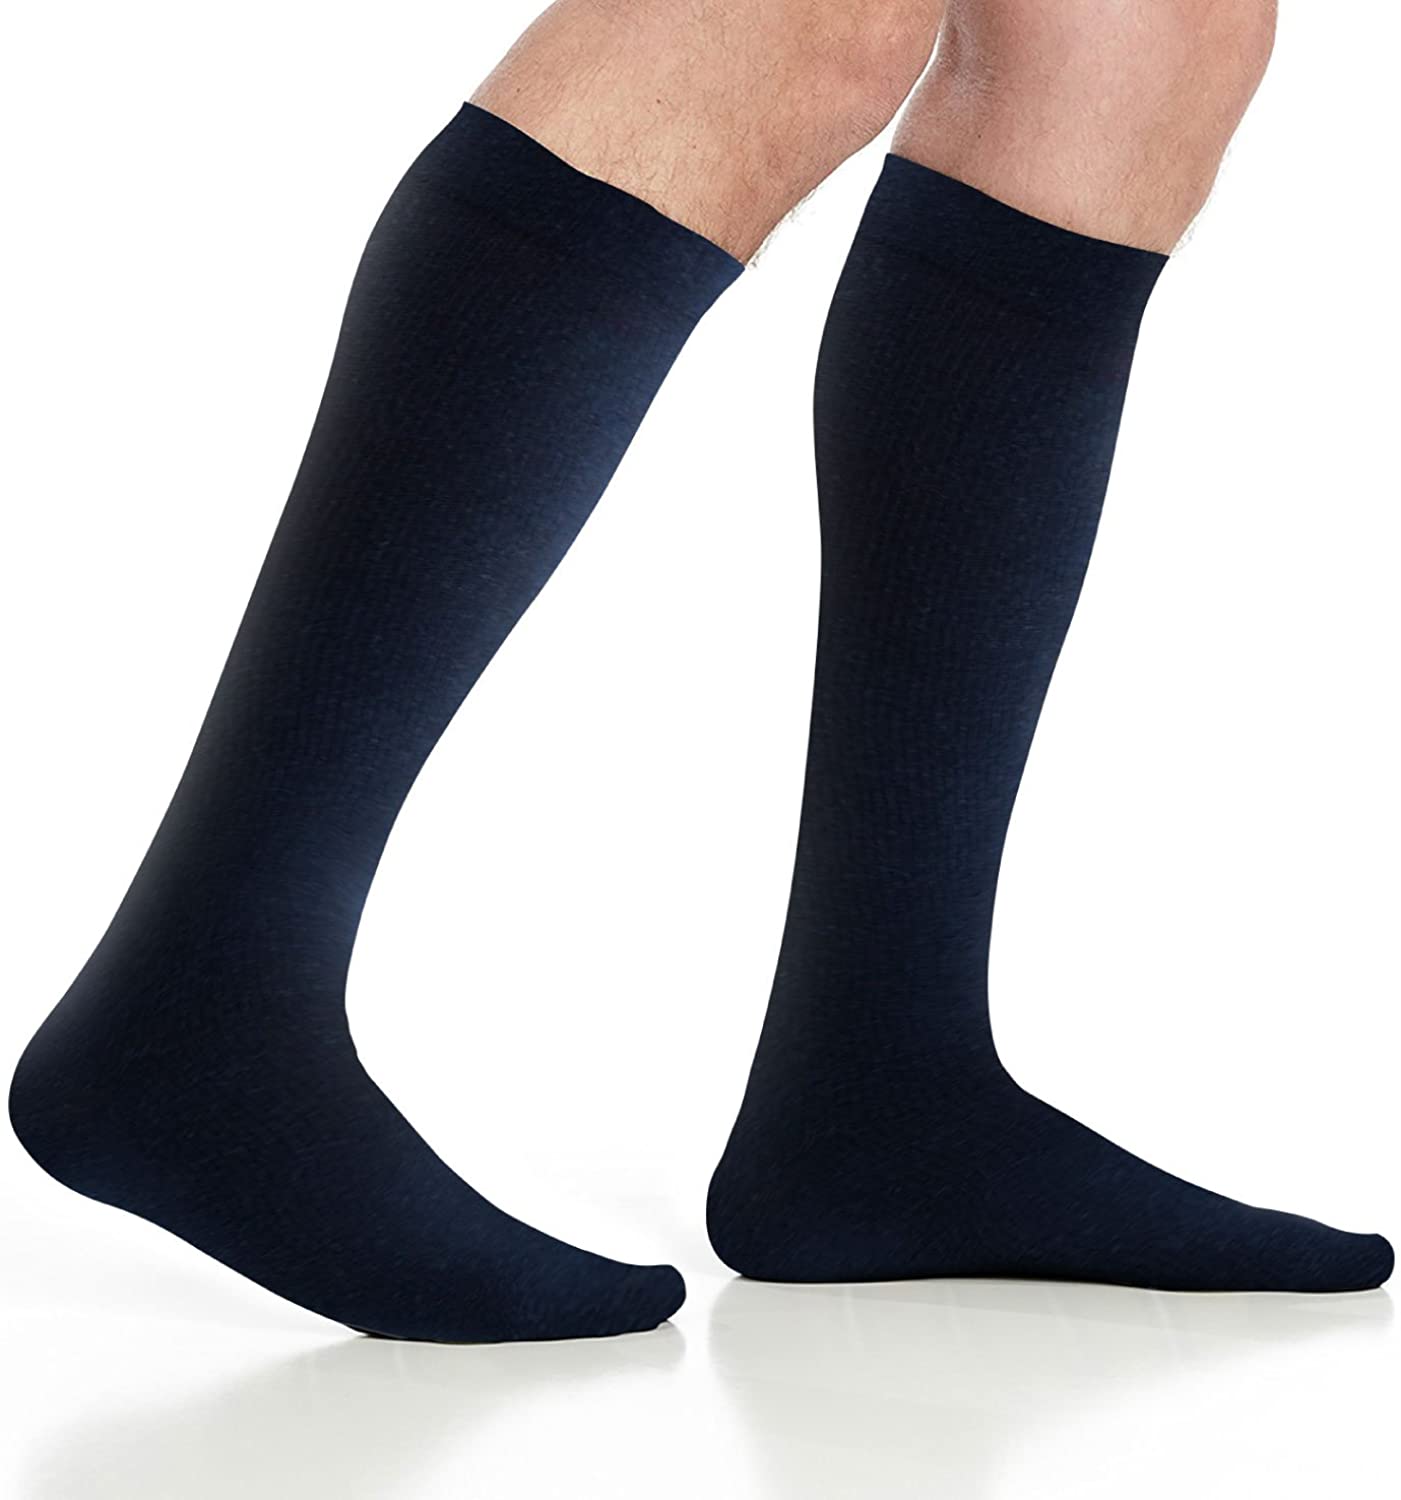 6 compression socks 1